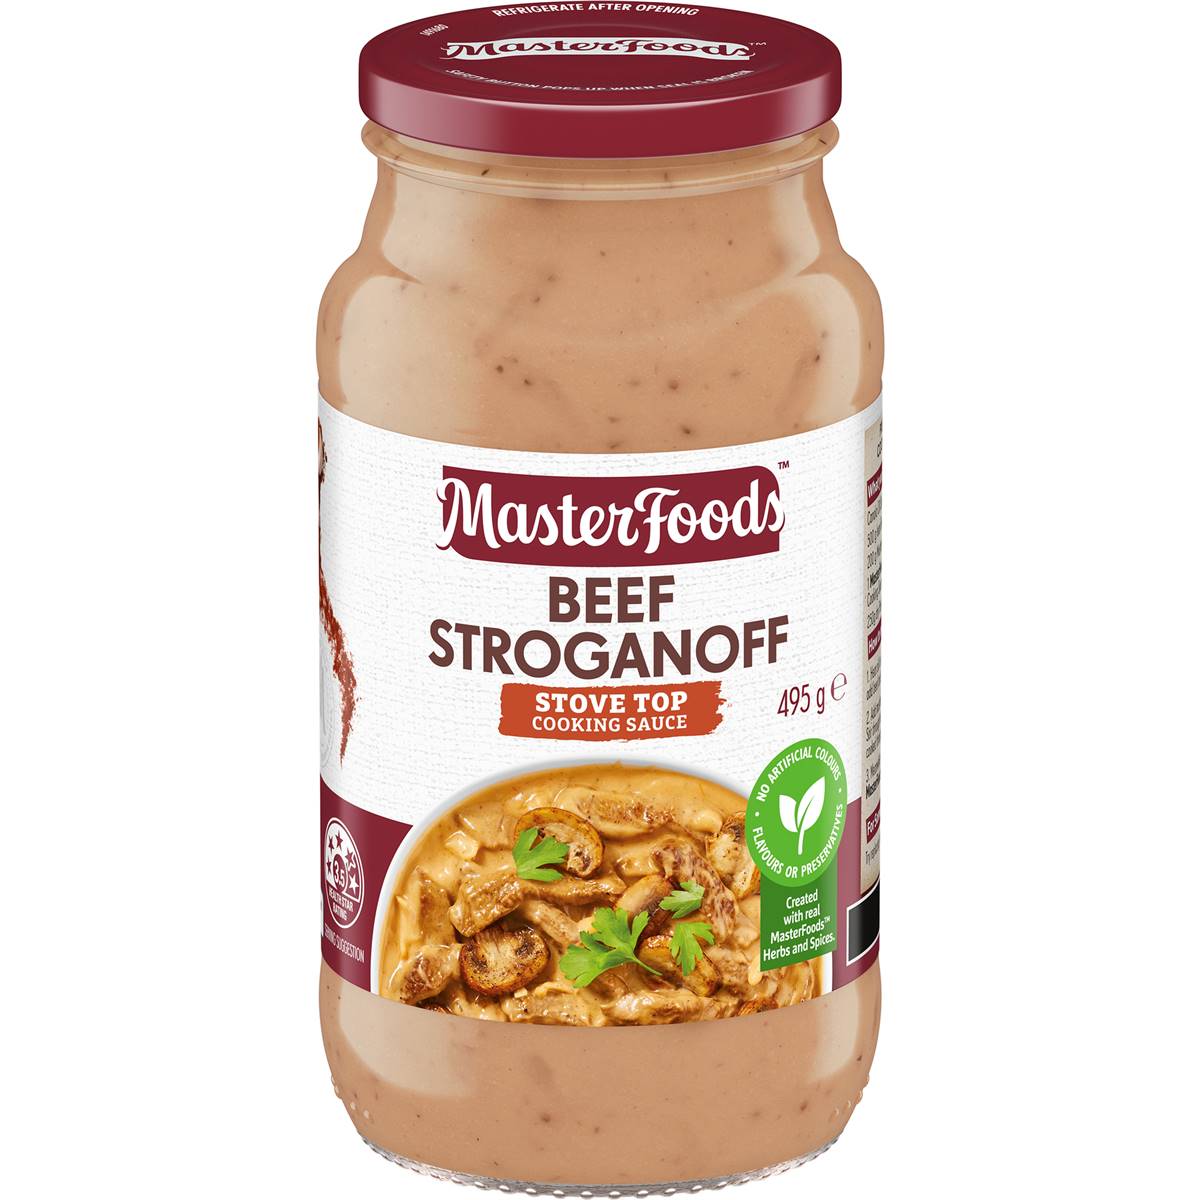 Calories in Masterfoods Beef Stroganoff Simmer Sauce